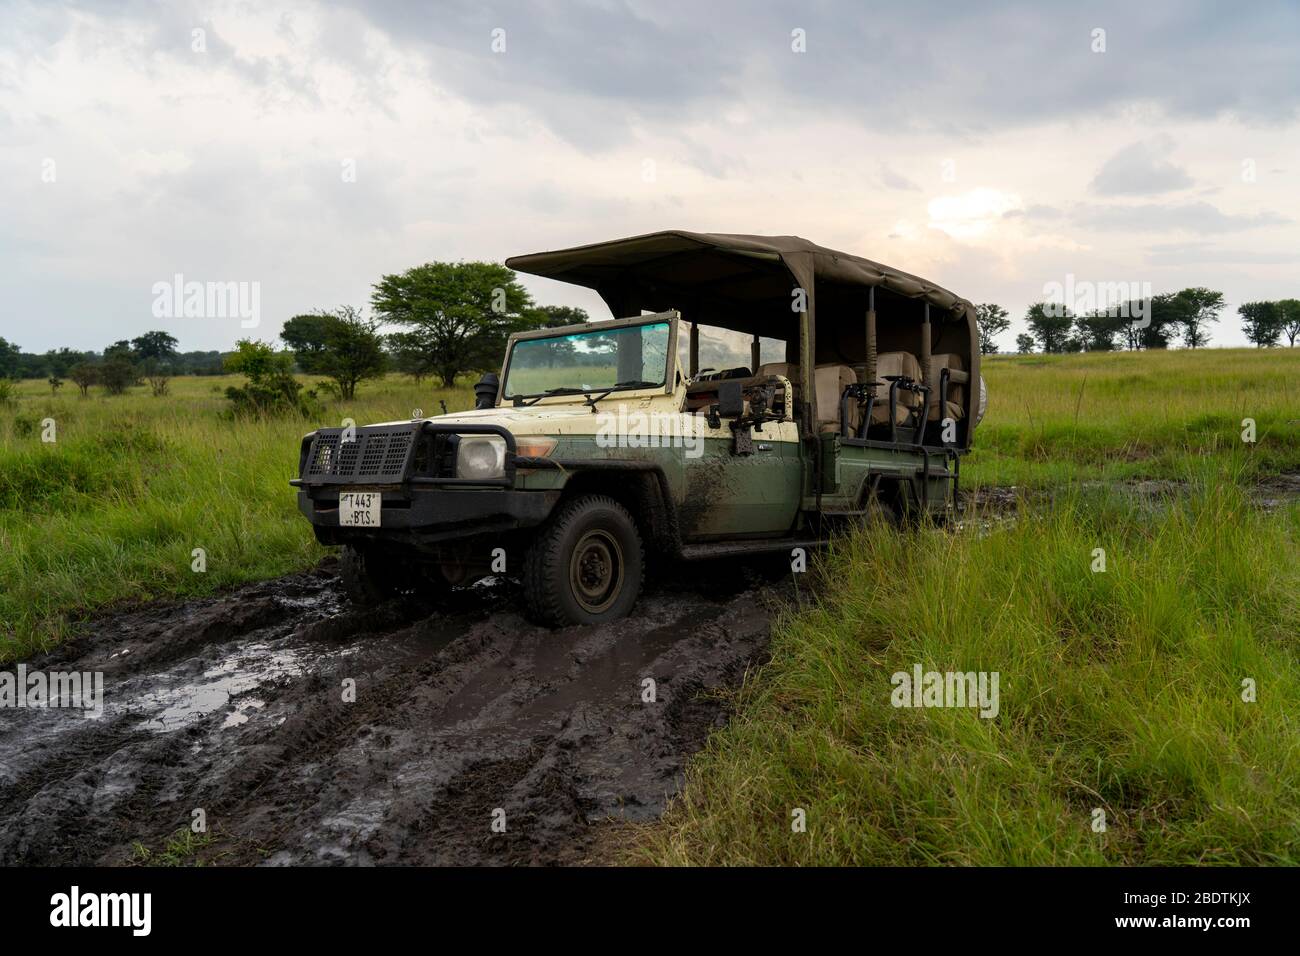 safari jeep stuck in mud during rainy season Stock Photo